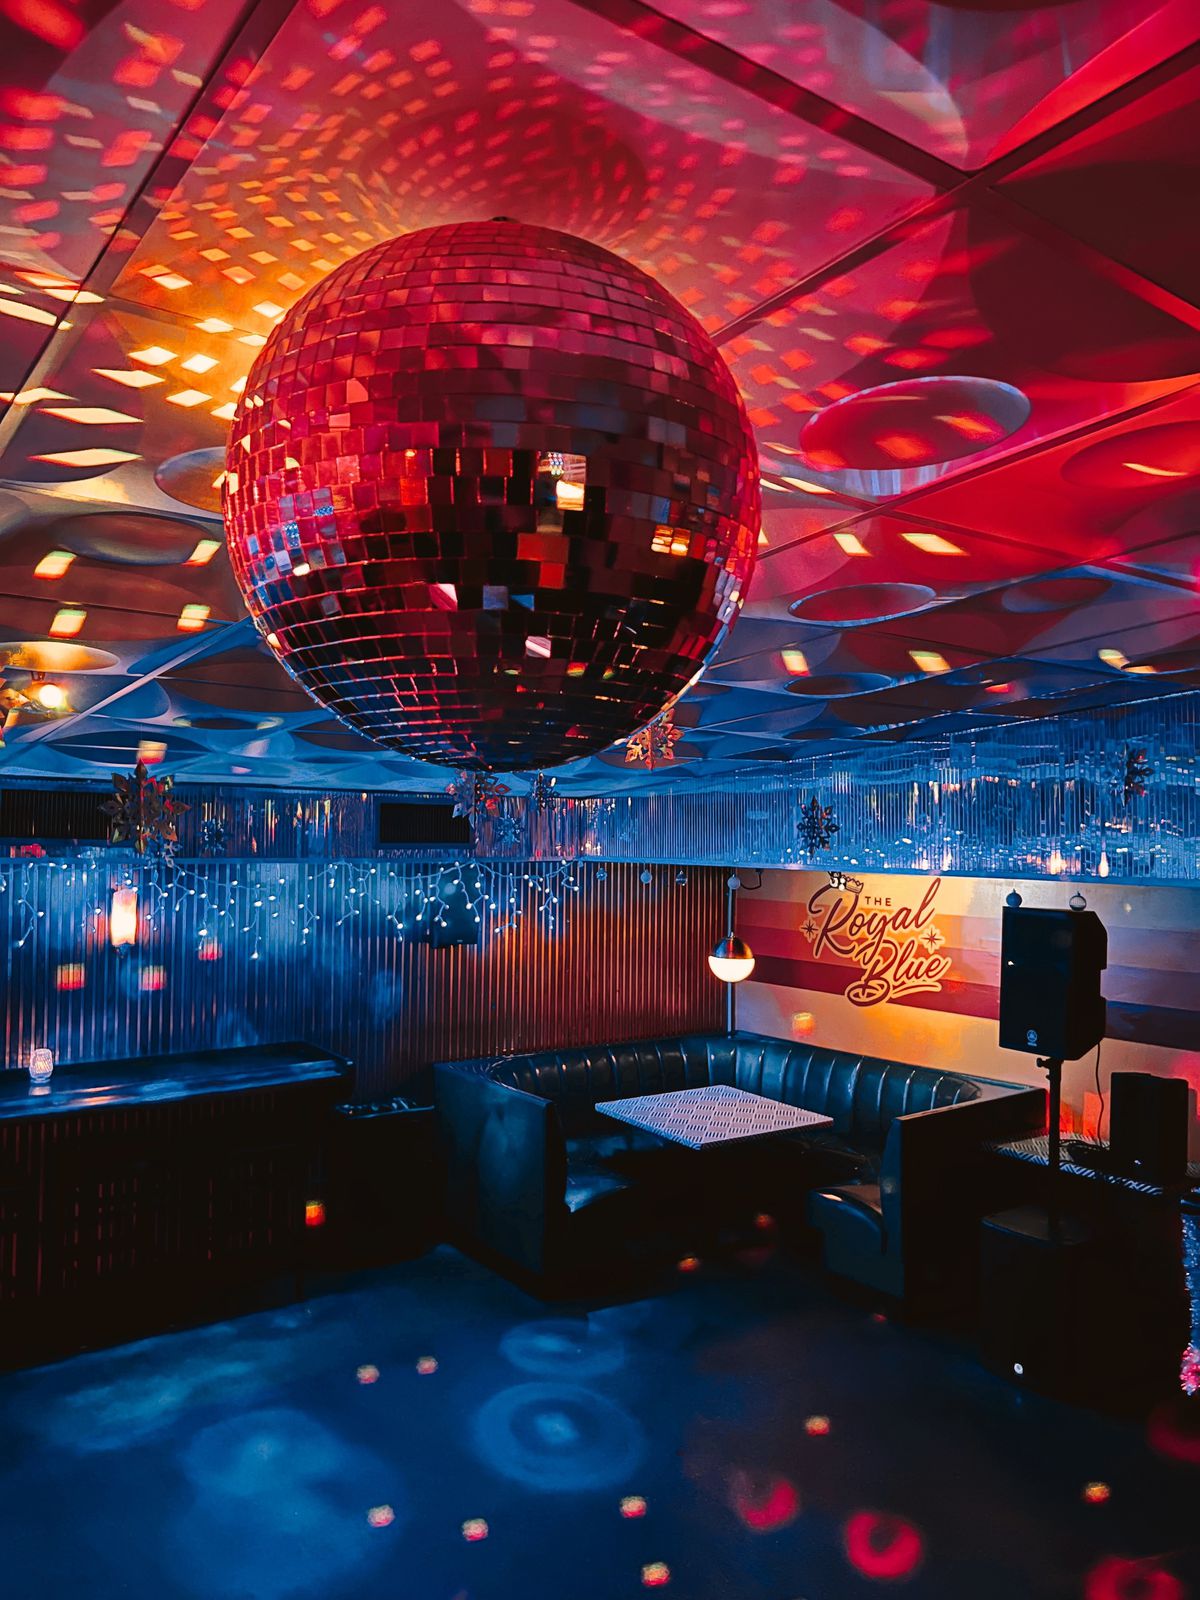 disco ball at Royal Blue in Baltimore